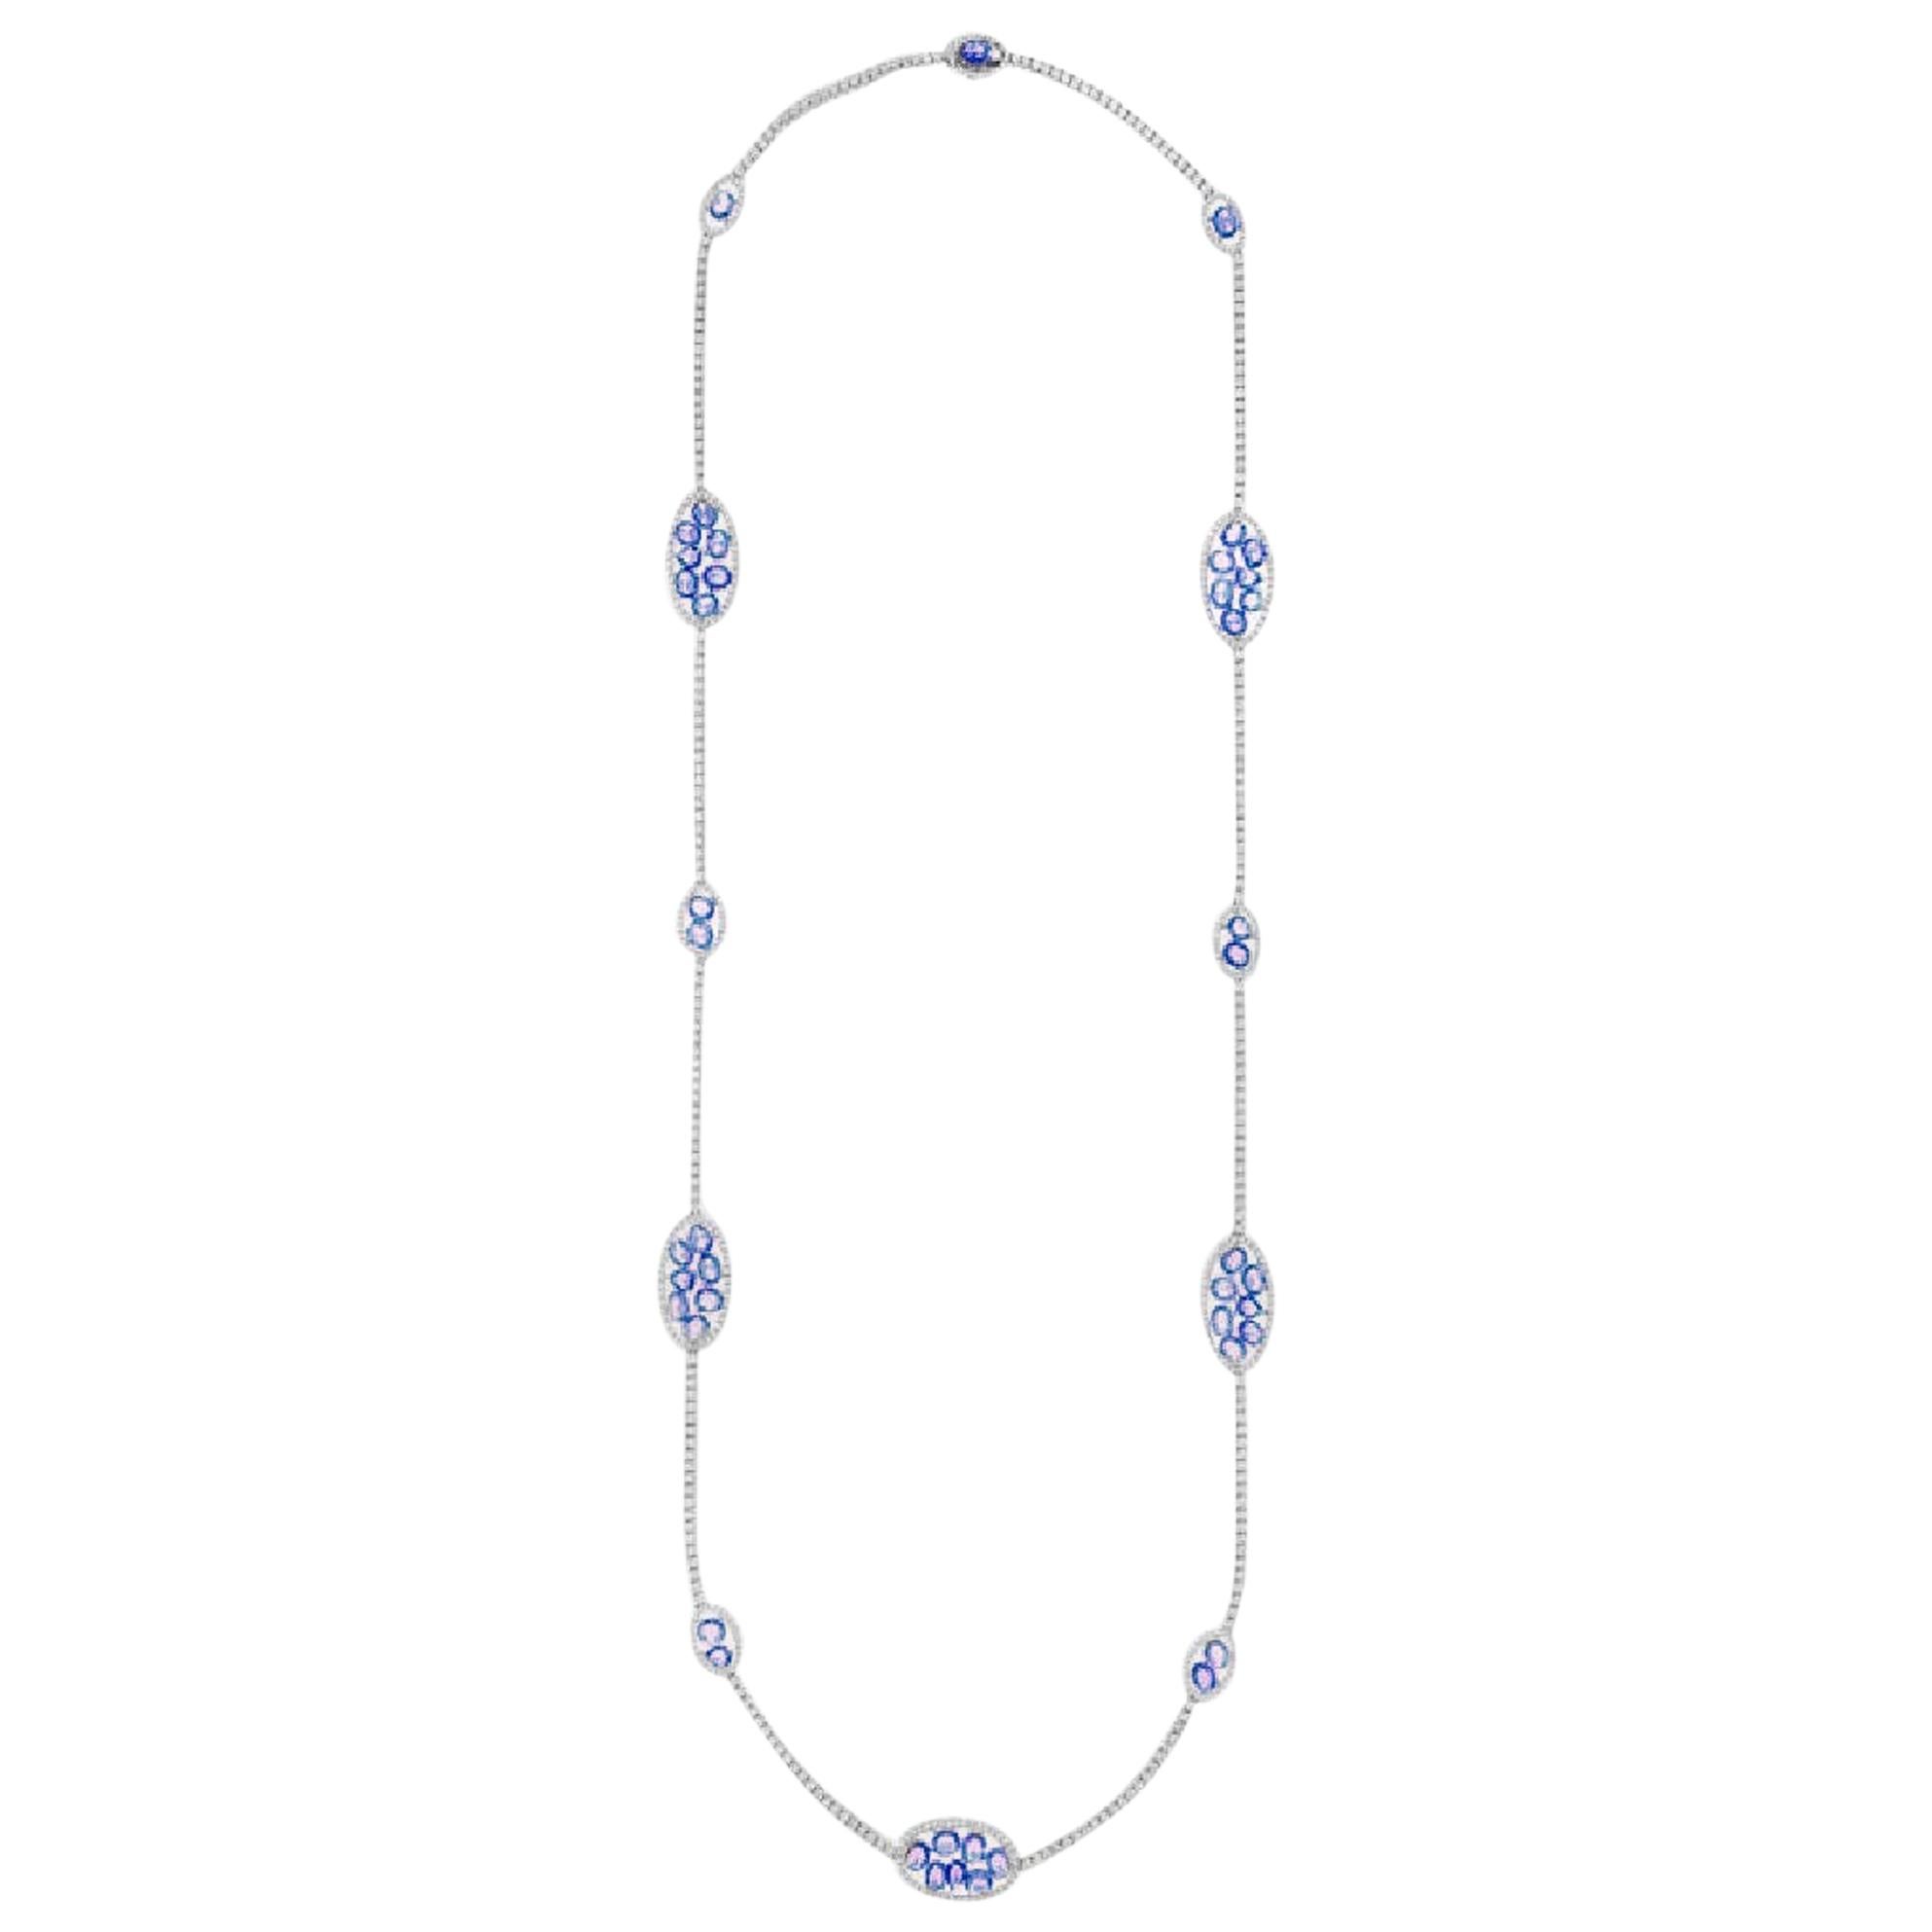 21.84 Carat Blue Sapphire and 9.27 Carat Diamond Opera Necklace